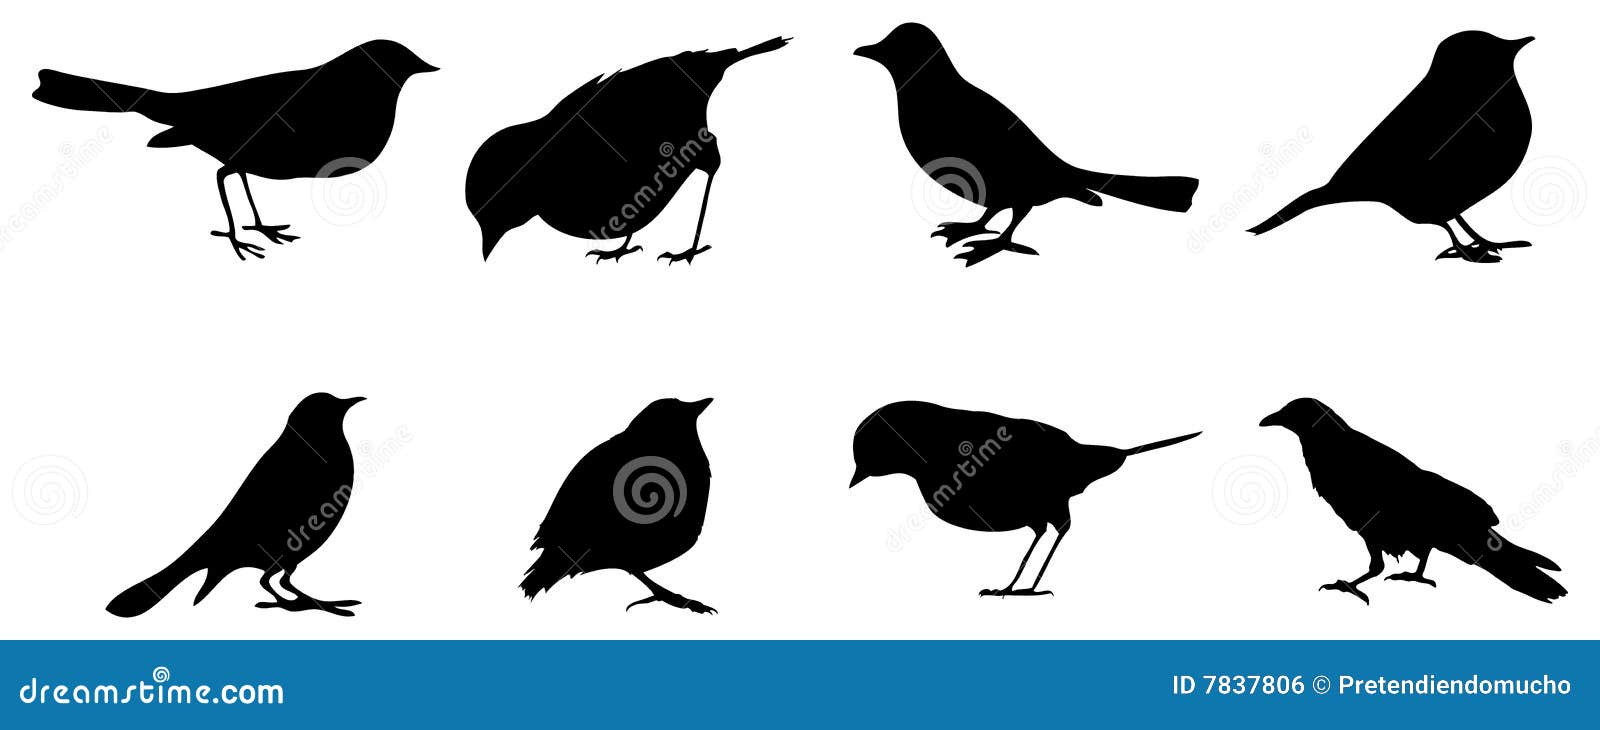 8 birds silhouettes on black.